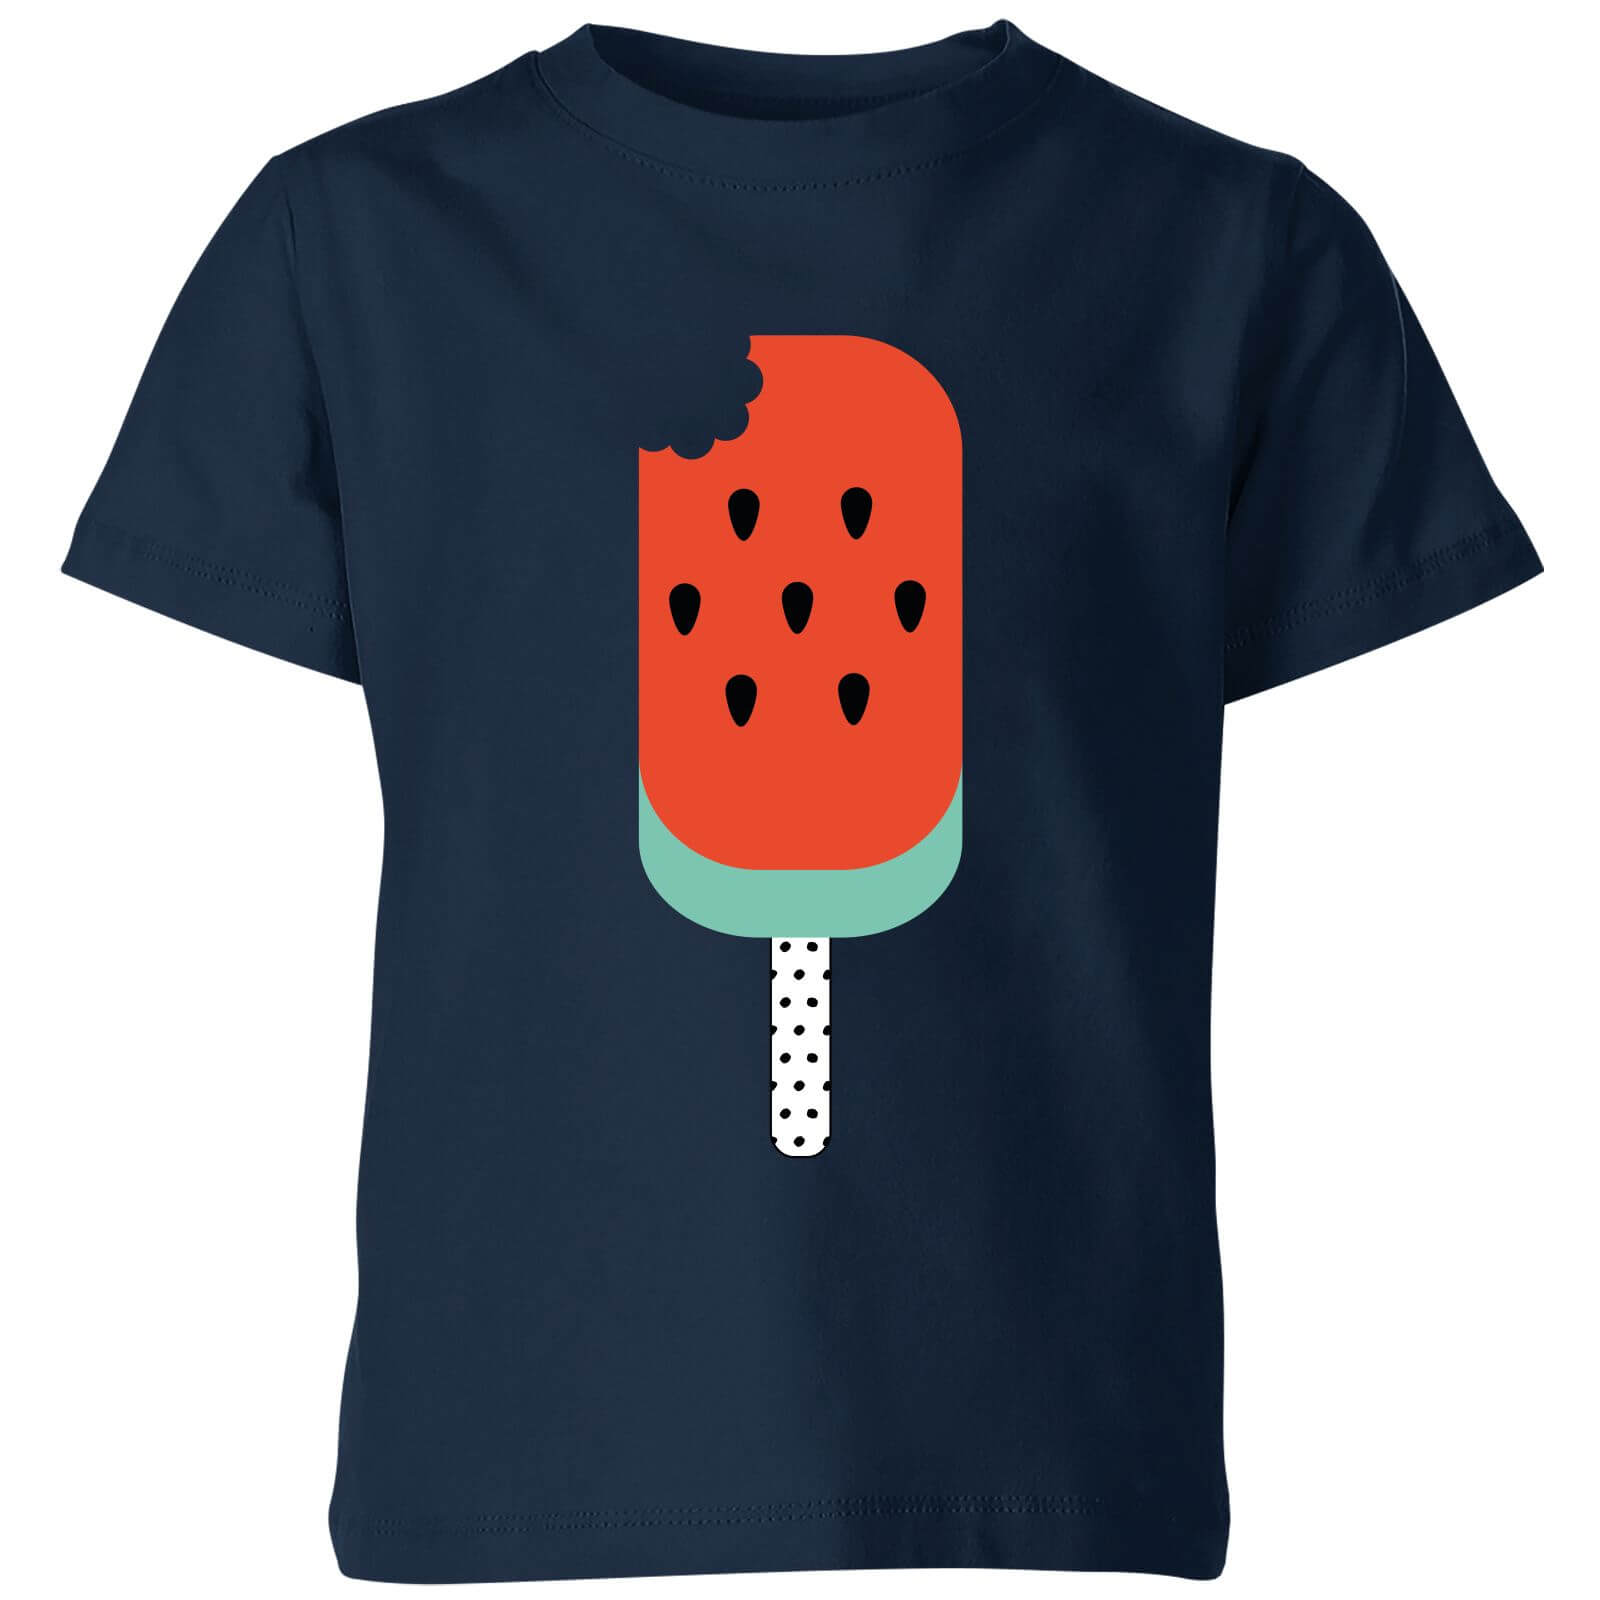 My Little Rascal Watermelon Lolly Kids' T-Shirt - Navy - 3-4 Years